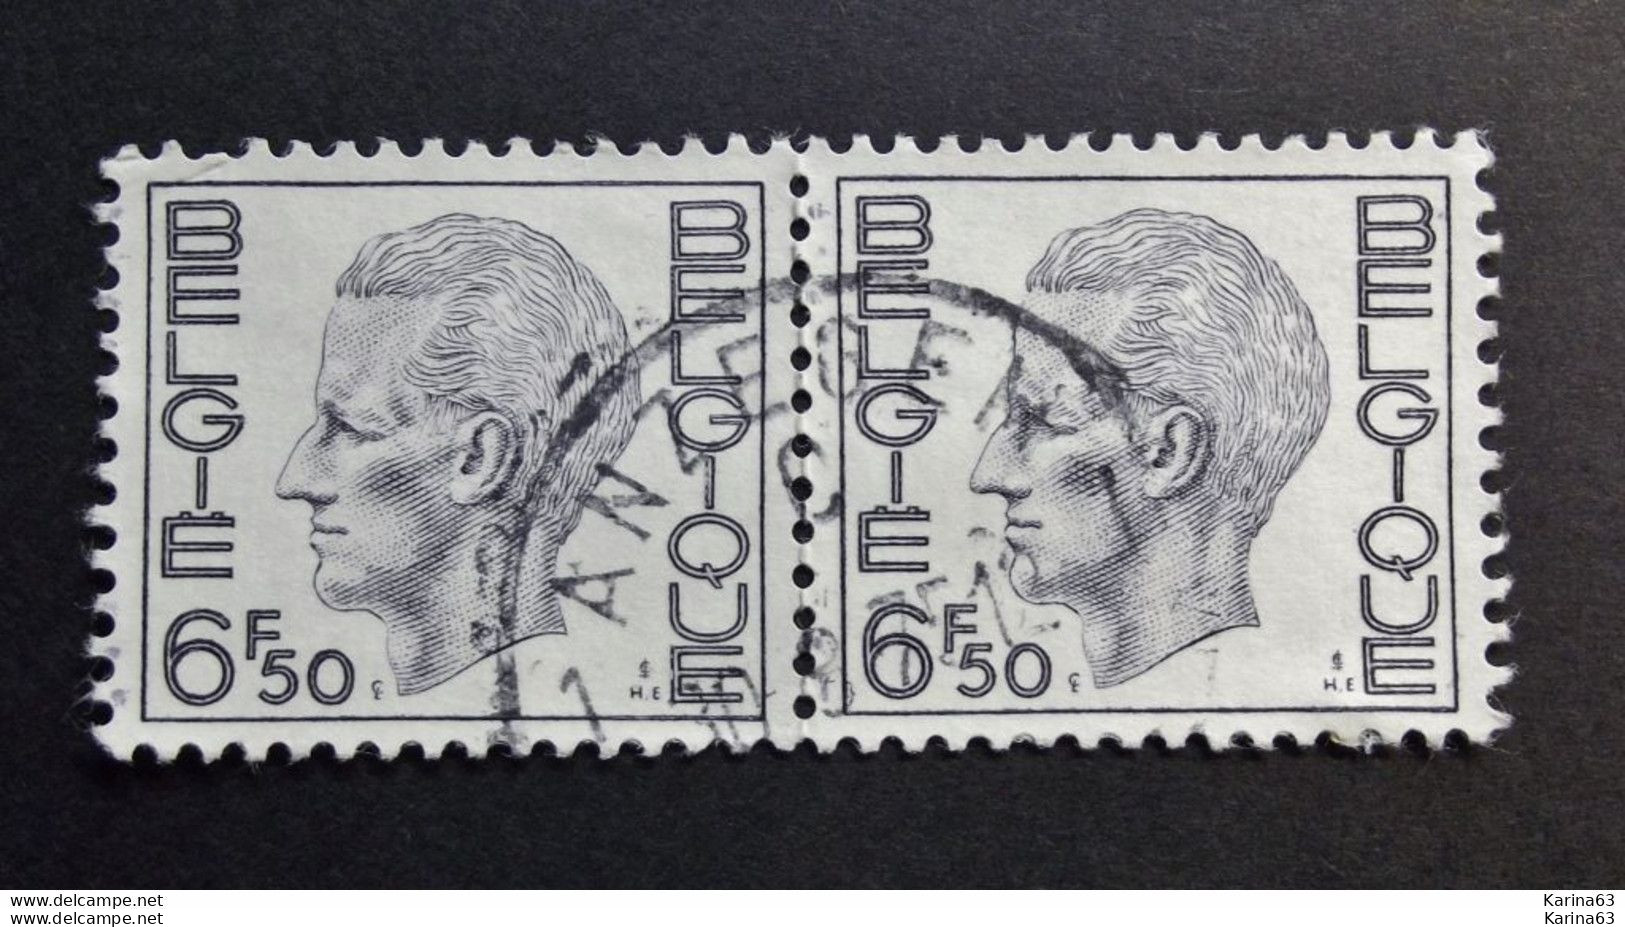 Belgie Belgique - 1974 - OPB/COB N° 1744  ( 2 Values ) Koning Boudewijn Type Elstrom  Obl. Anzegem - Oblitérés